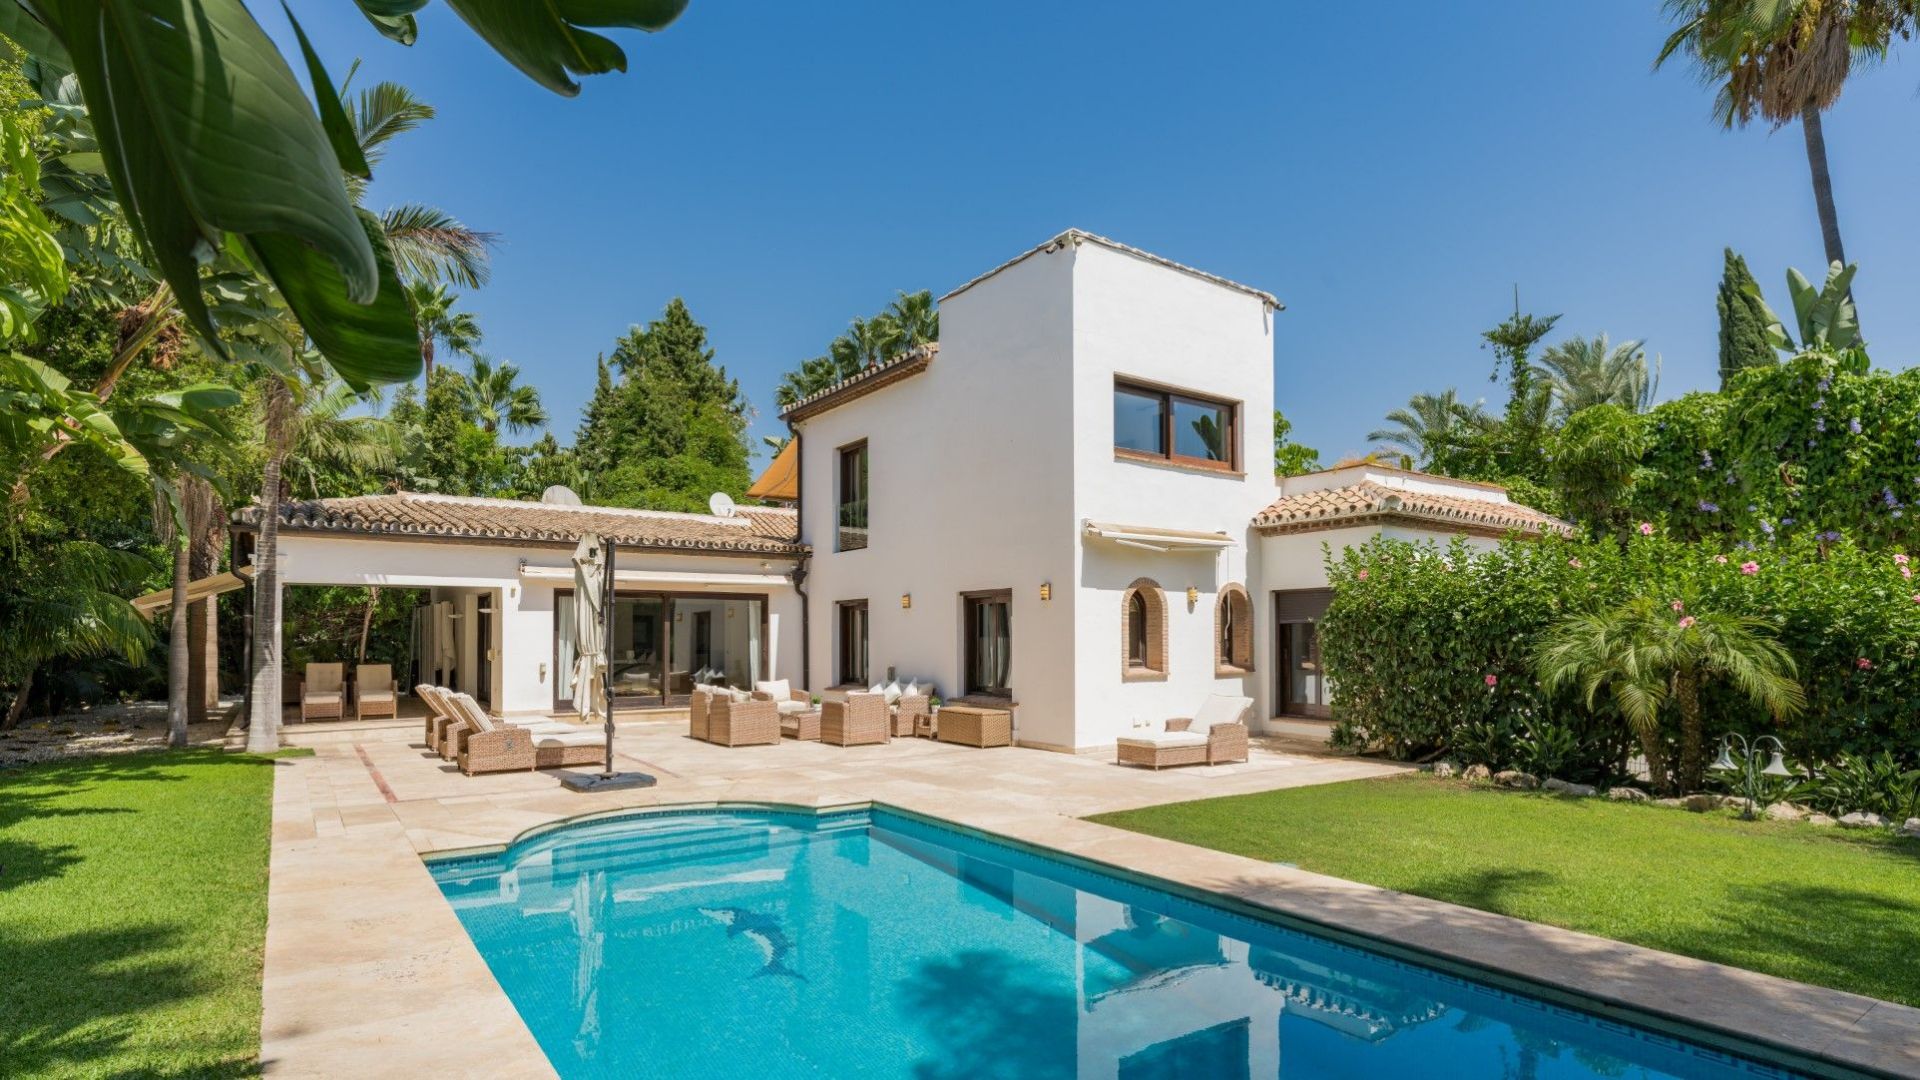 5 bedroom house / villa for sale in Marbella, Costa del Sol